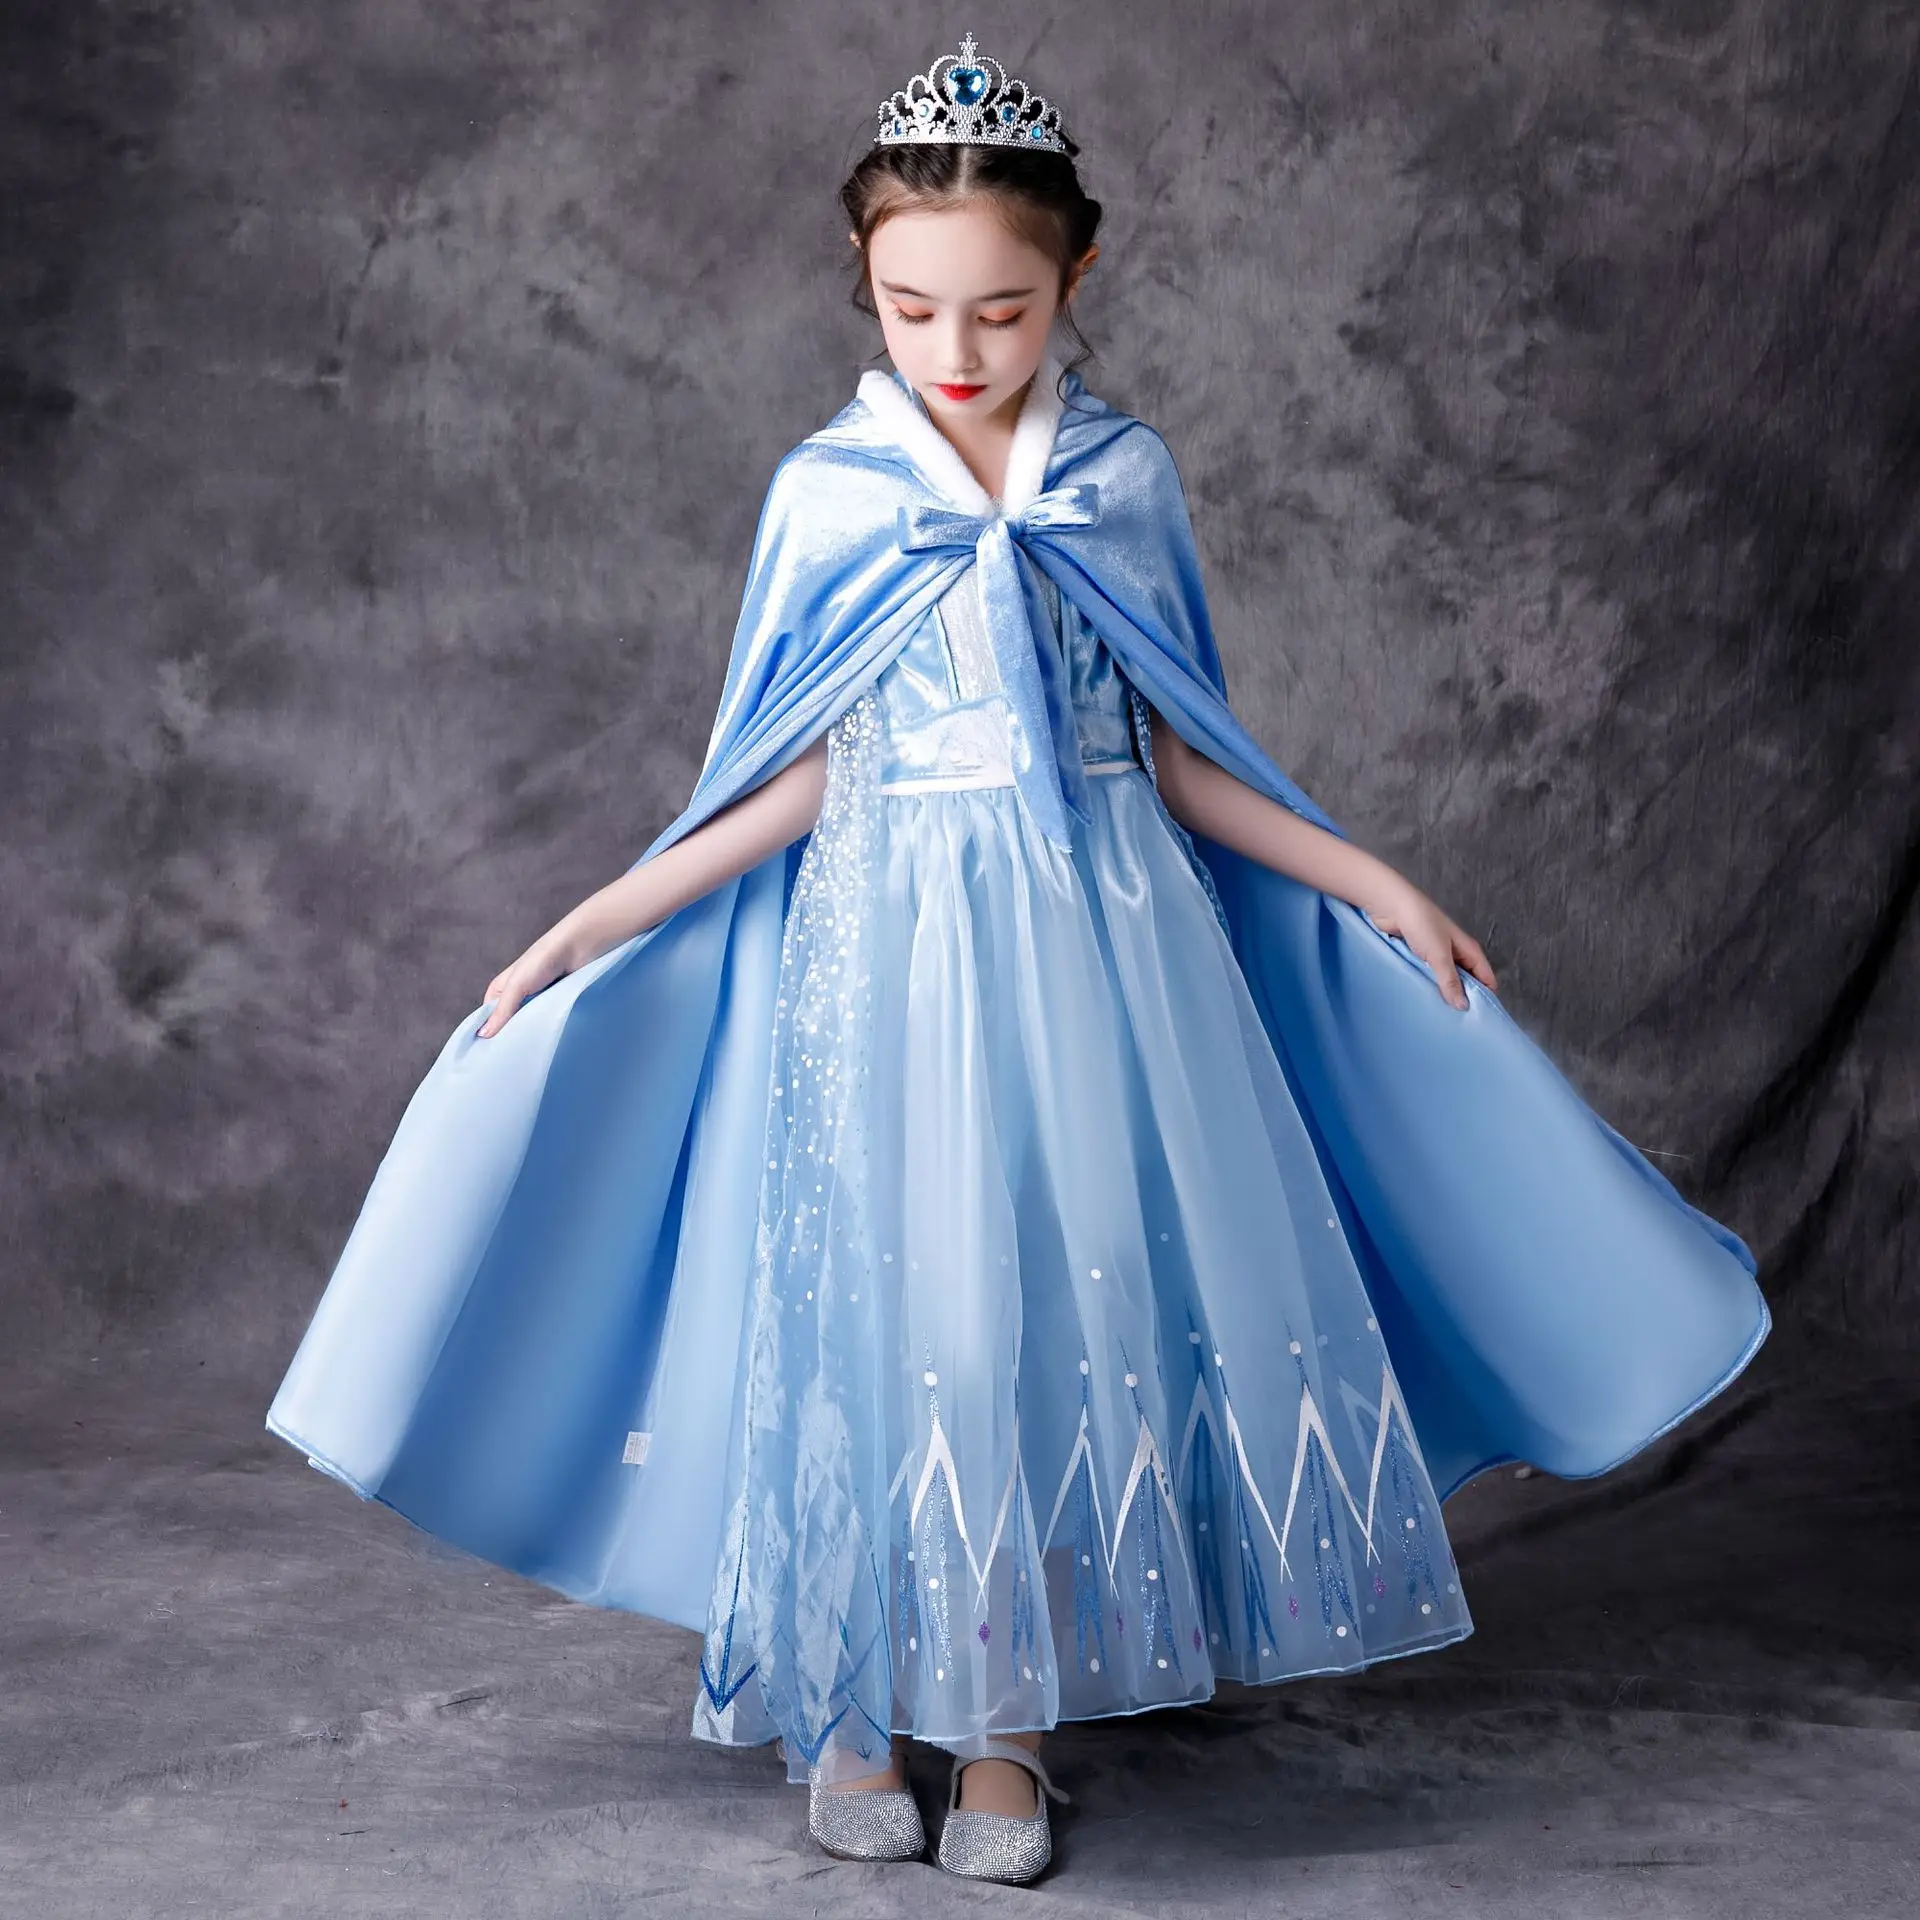 Cape Kids Girls Anna Elsa Princess Party Fancy Dress Up Cosplay Costume Dress